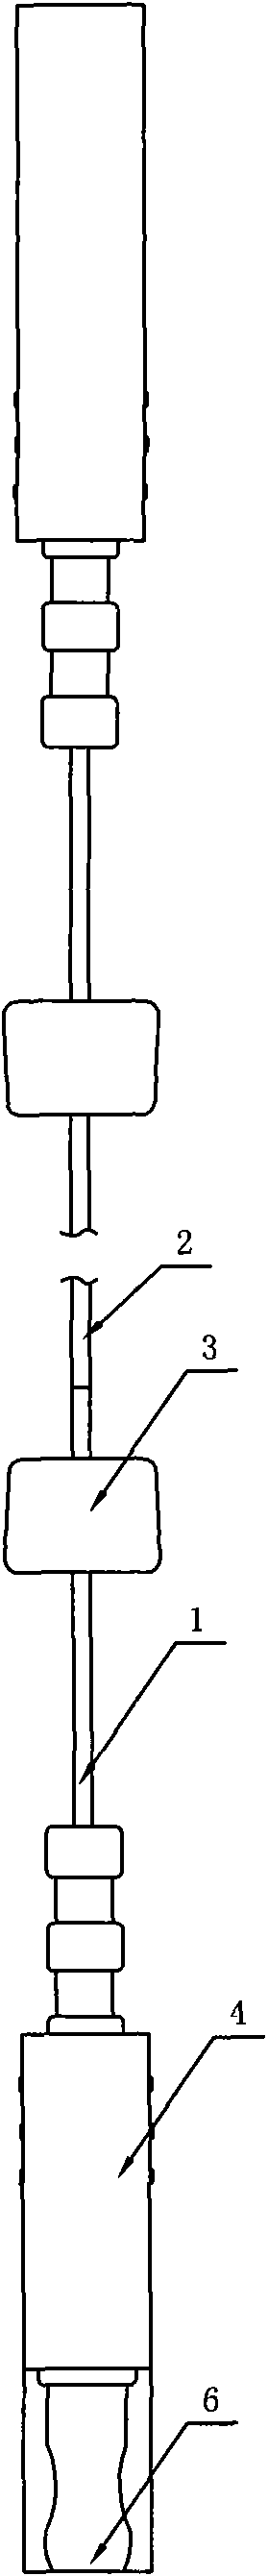 A heating floor waterproof bidirectional male and female plug power line